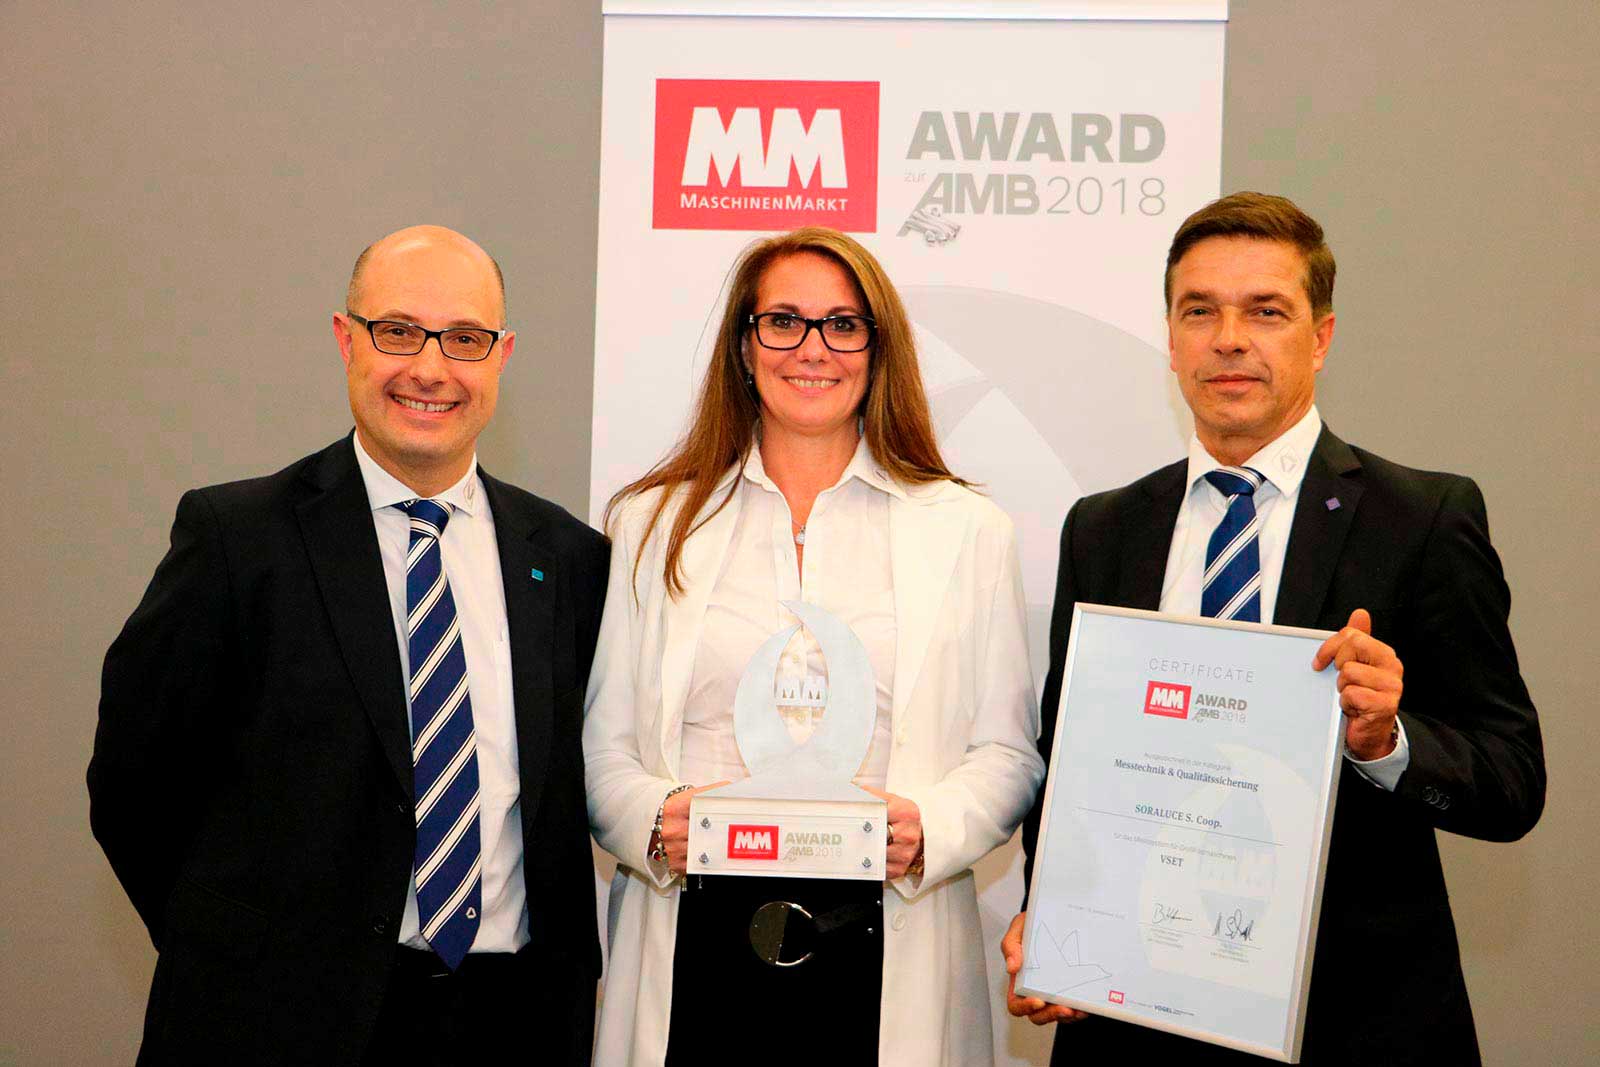 SORALUCE takes the “MM zur AMB 2018” award